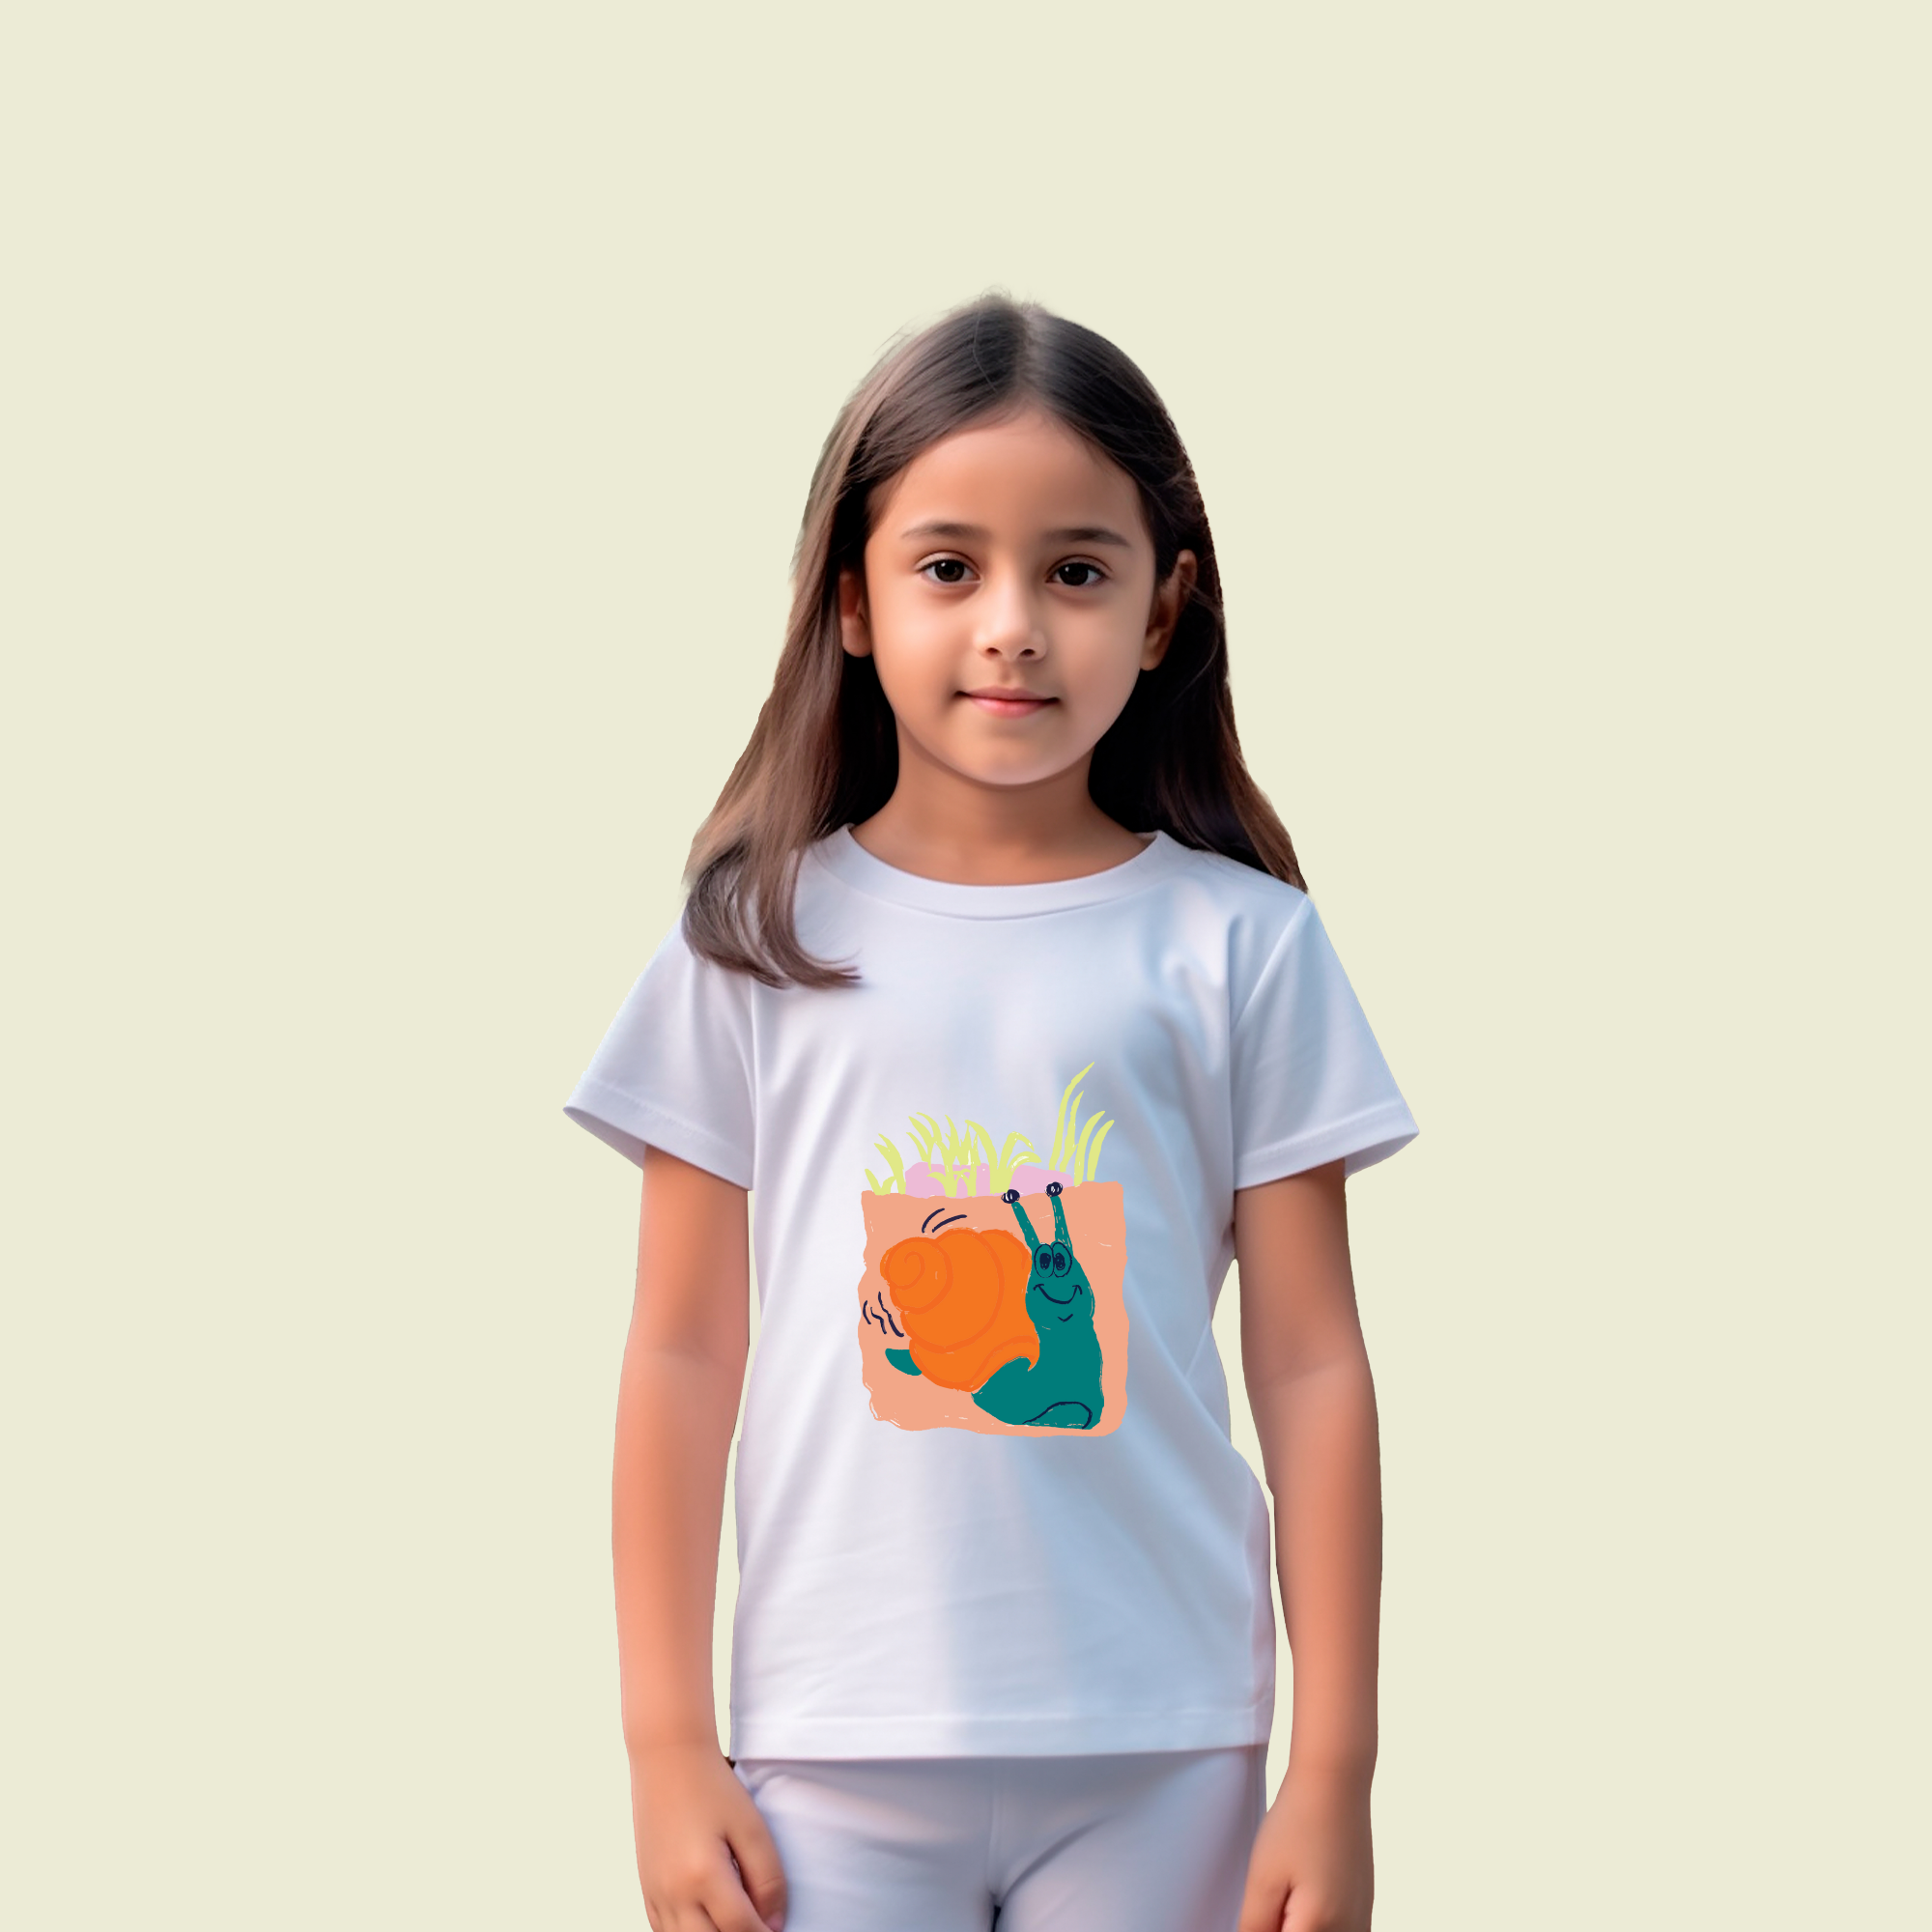 Snail T-shirt For Girls